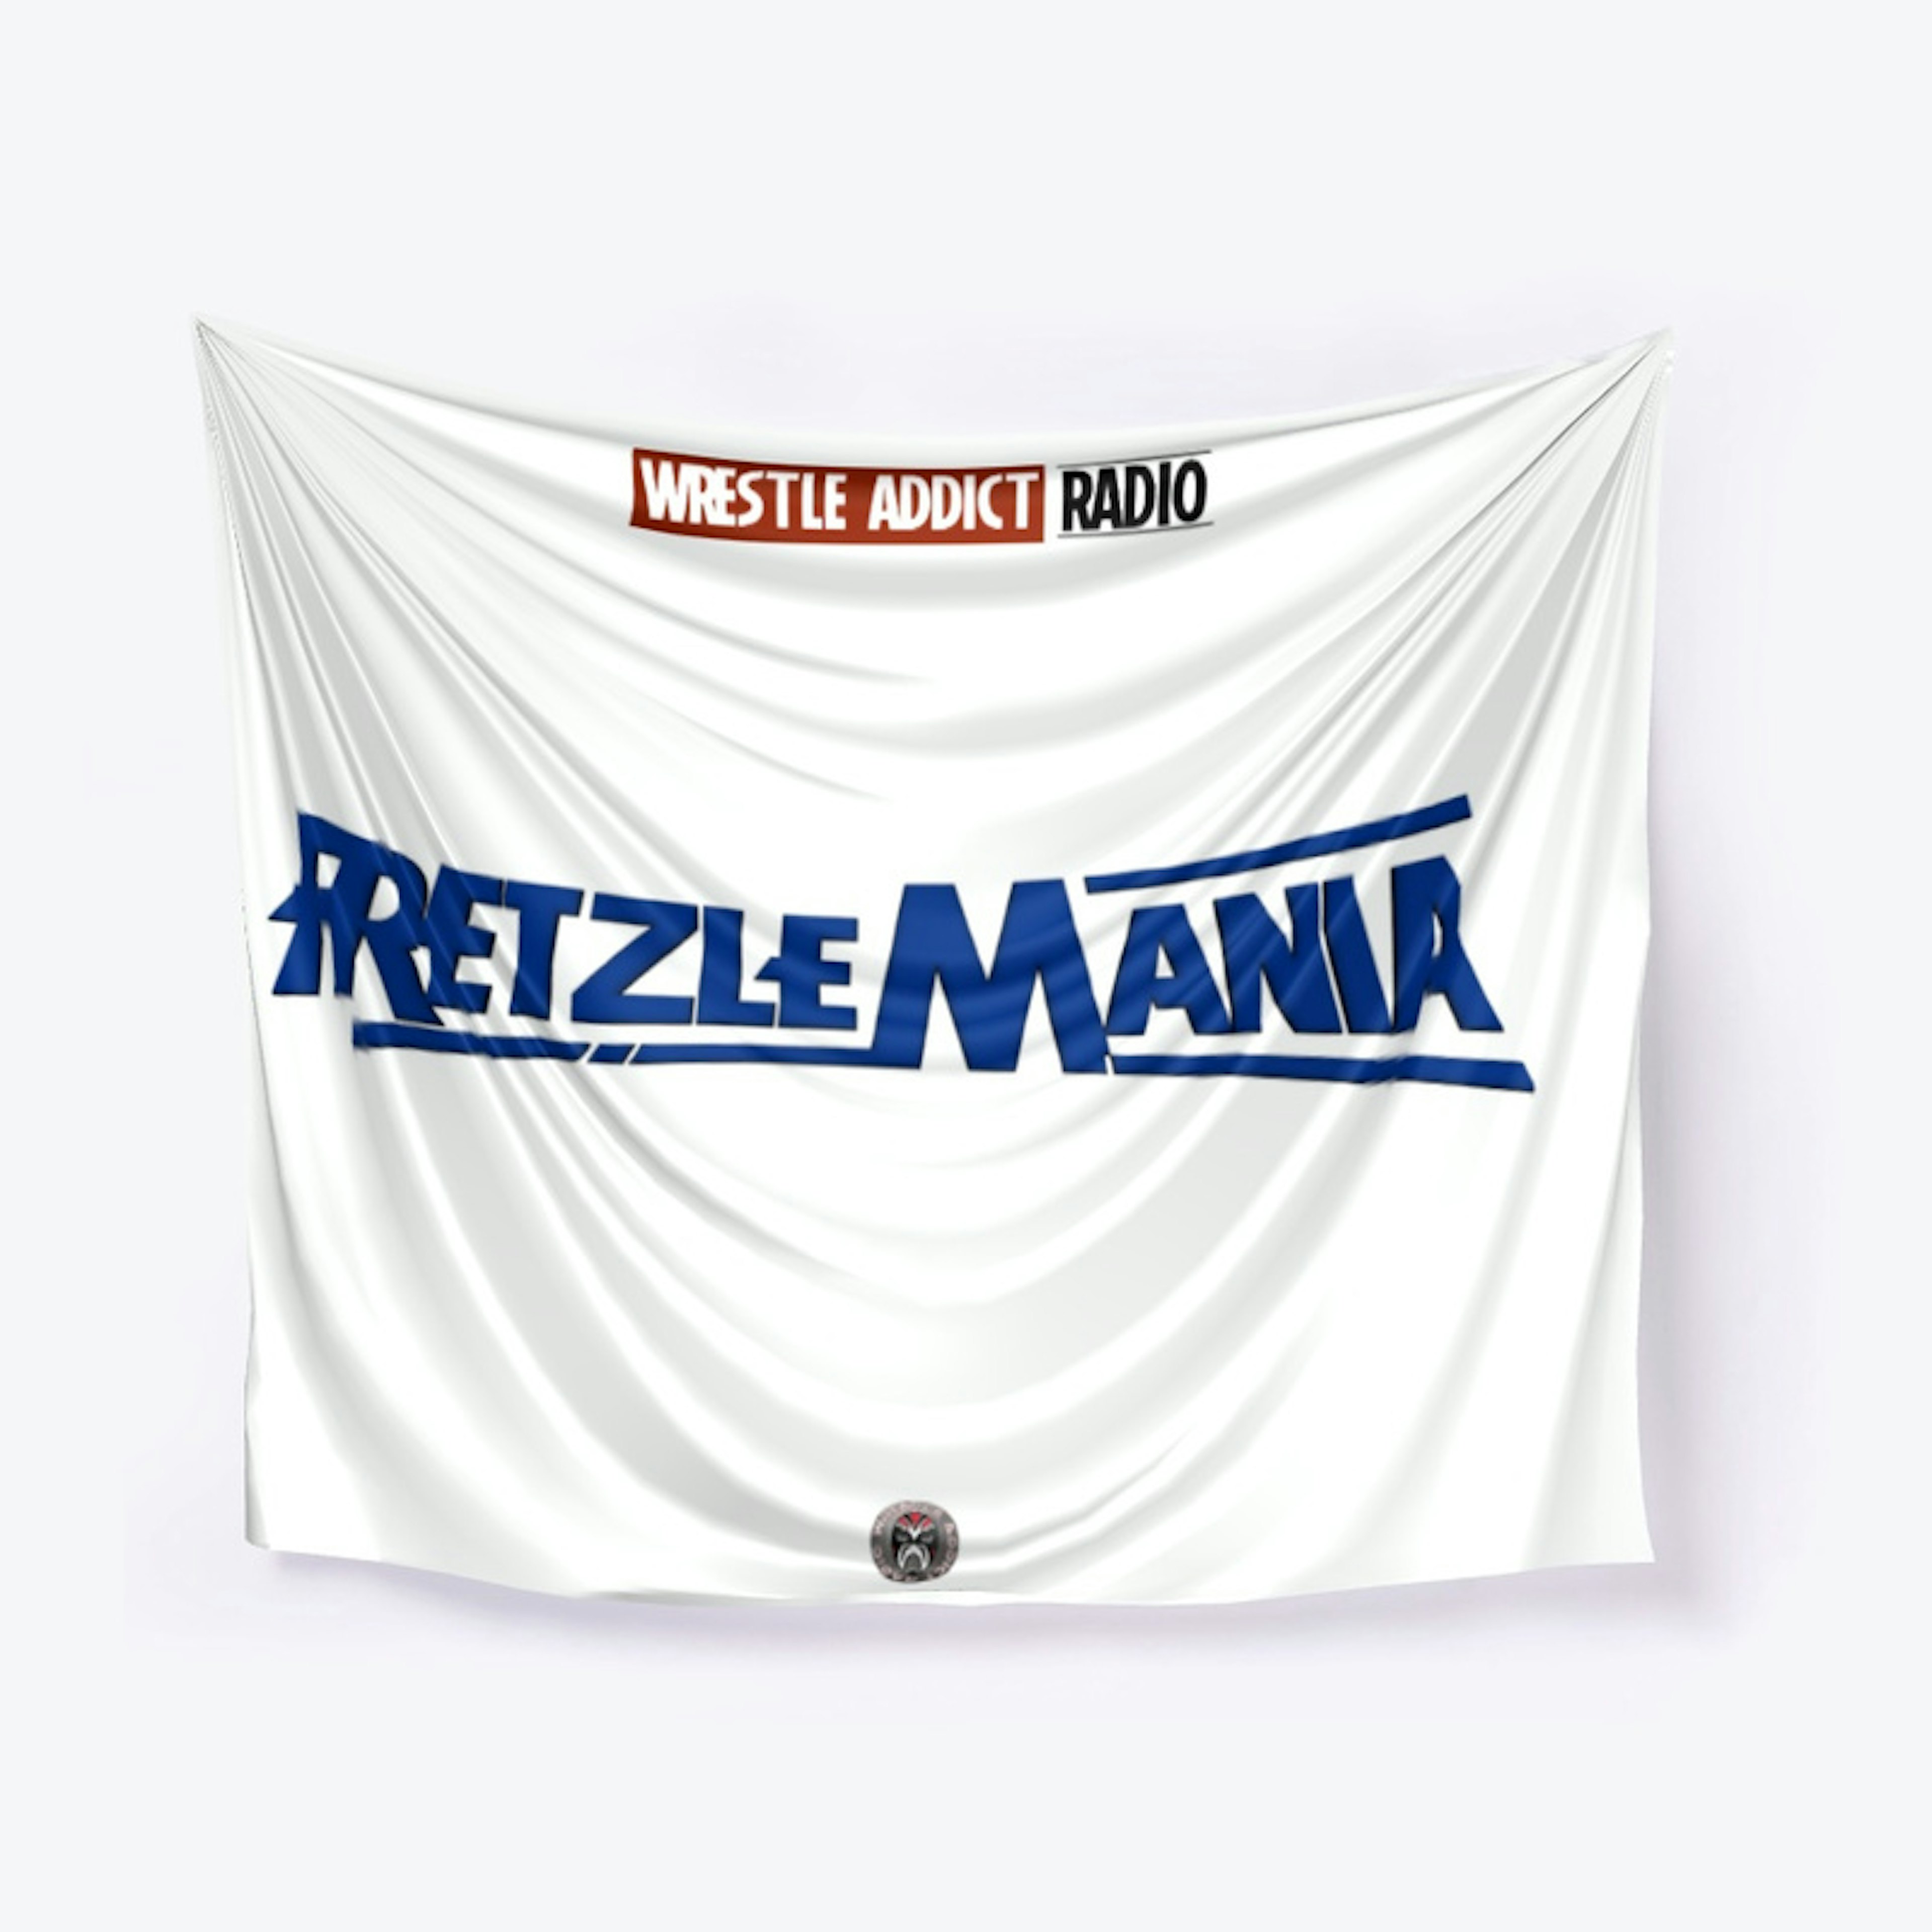 FretzleMania 2.0 Home Goods Collection